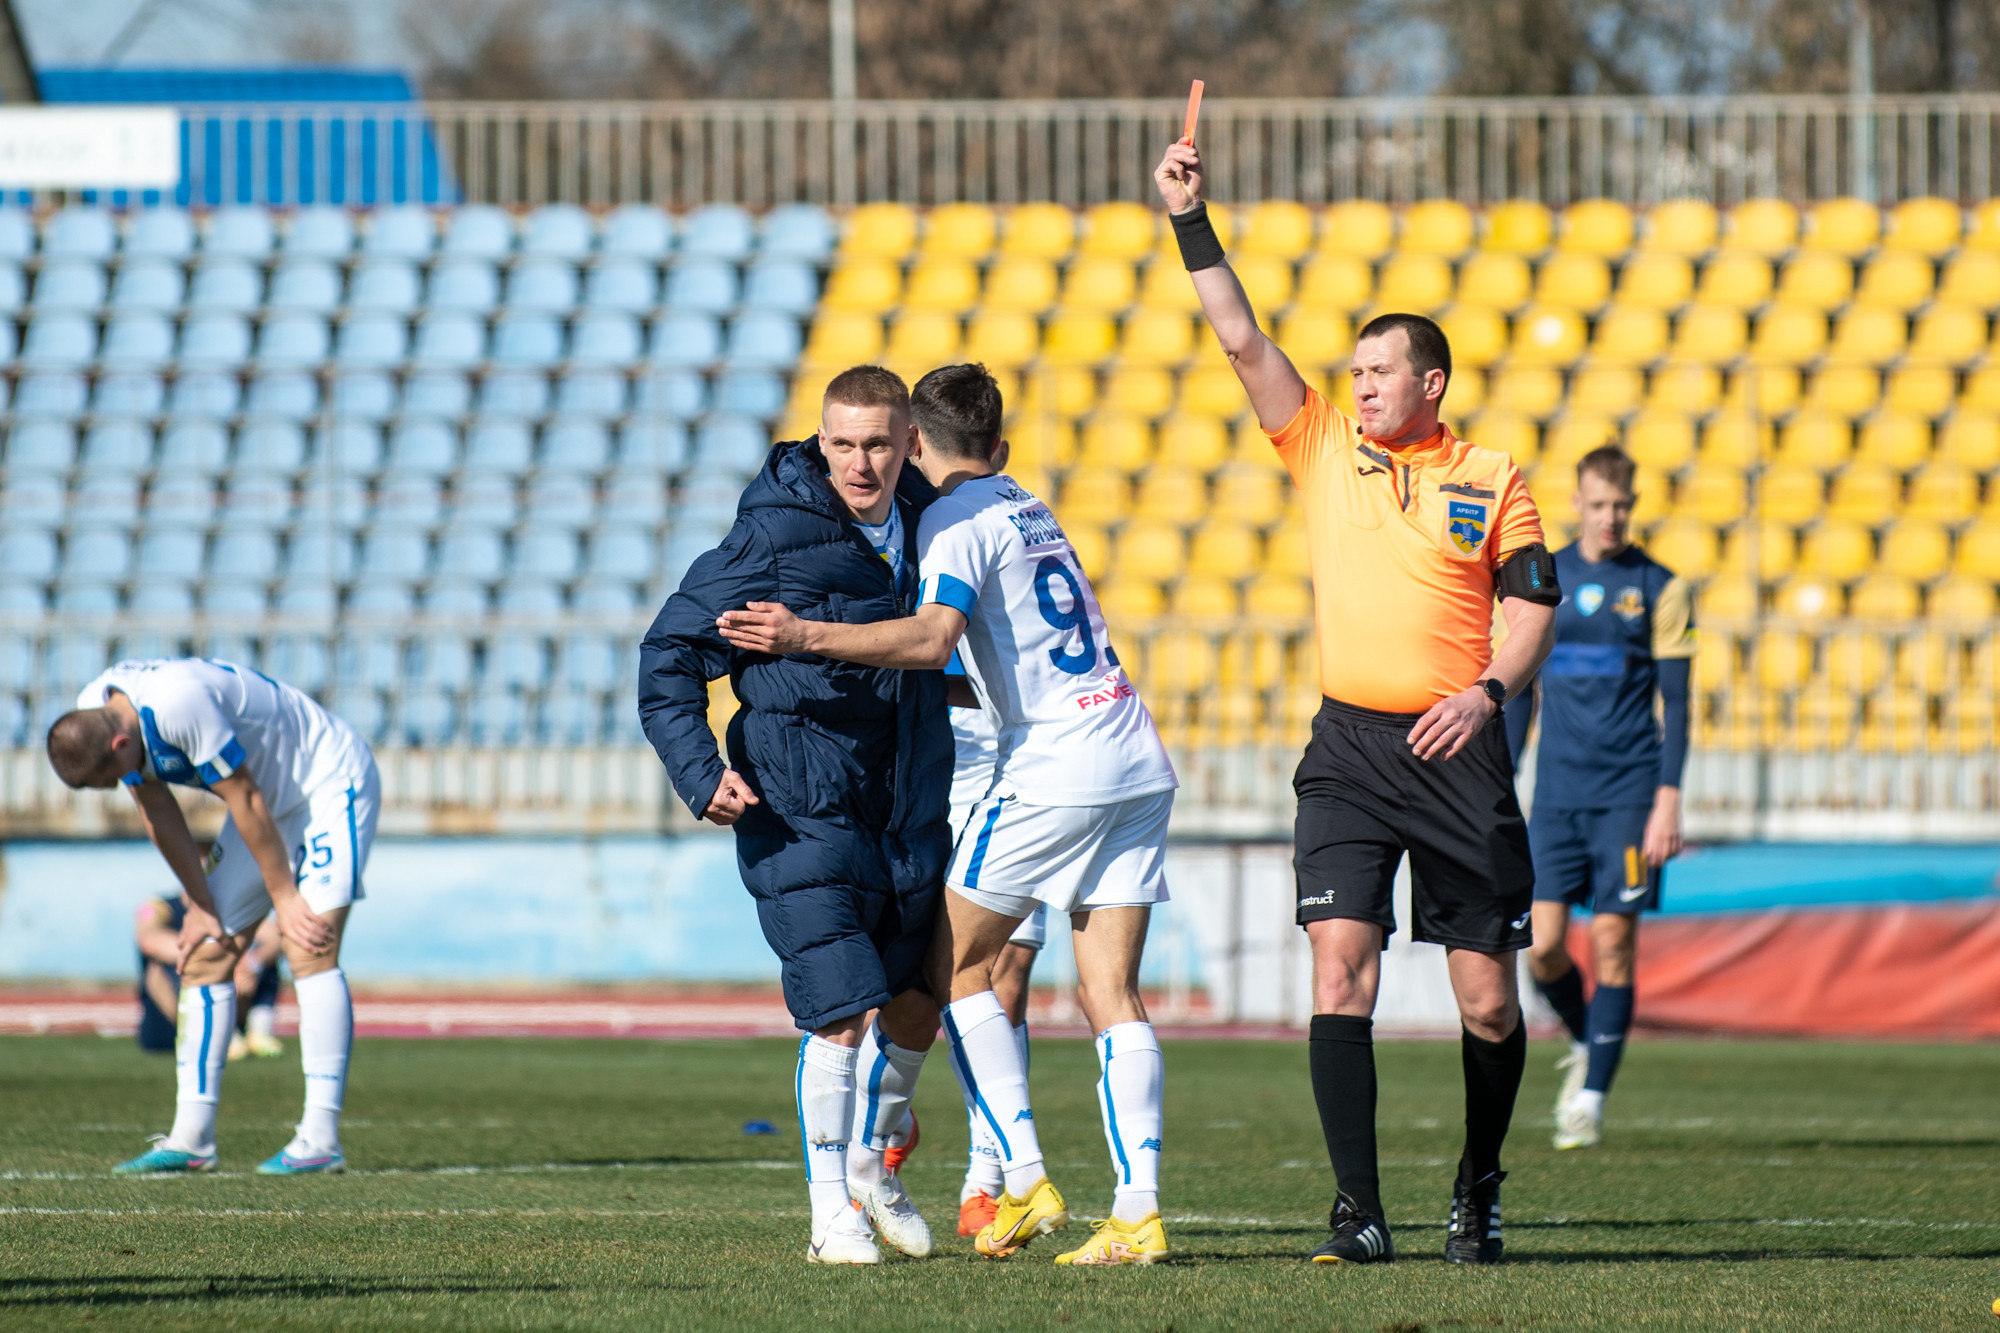 Dmytro Kryvushkin – Oleksandria vs Dynamo referee